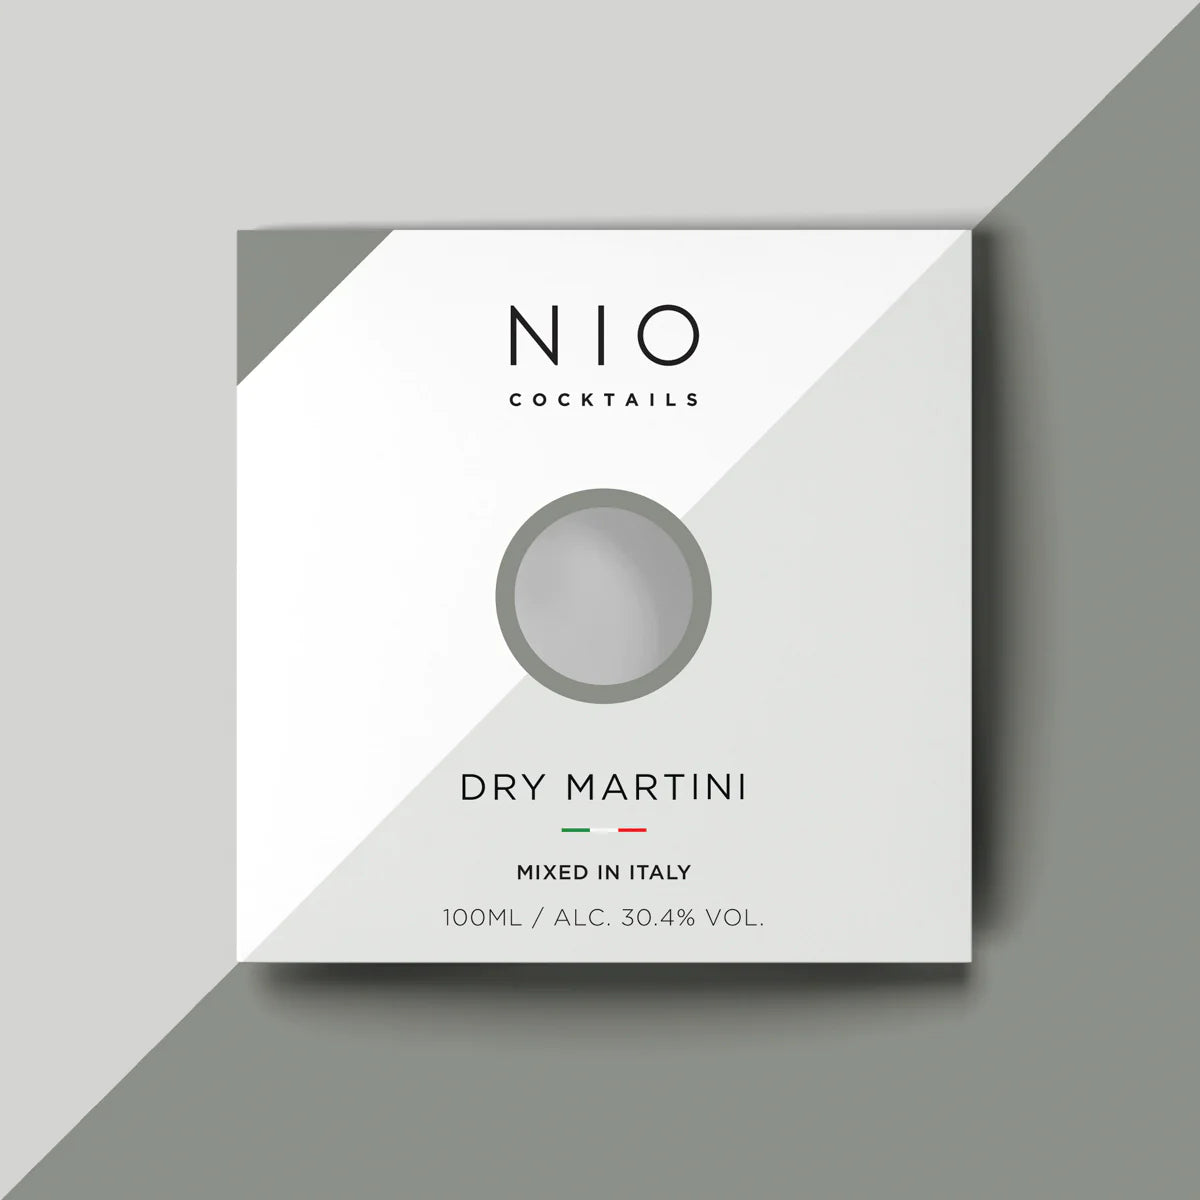 NIO cocktails dry martini skin